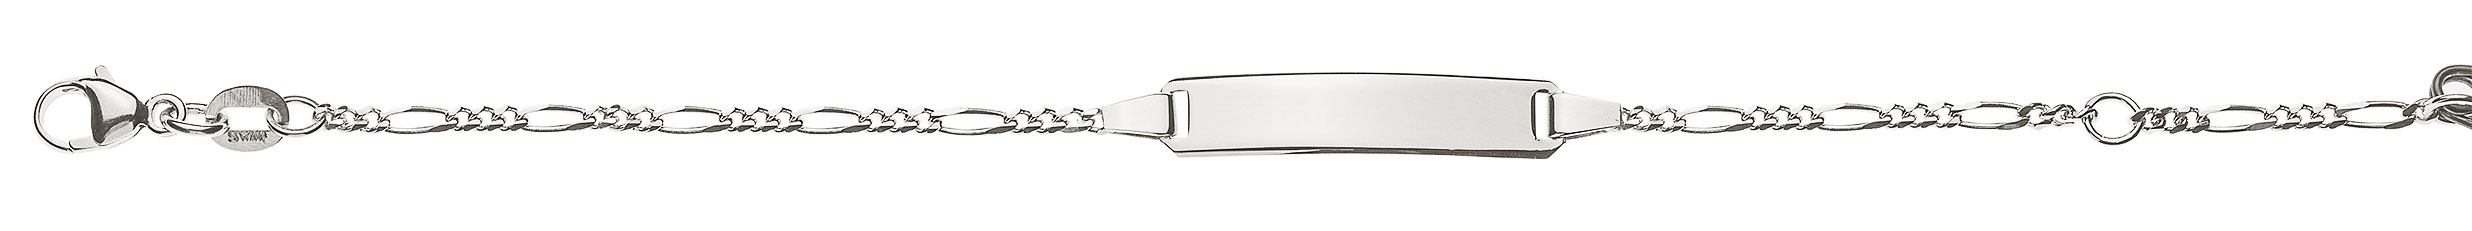 AURONOS Prestige ID-Bracelet en or blanc 18k Chaîne Figaro 18cm